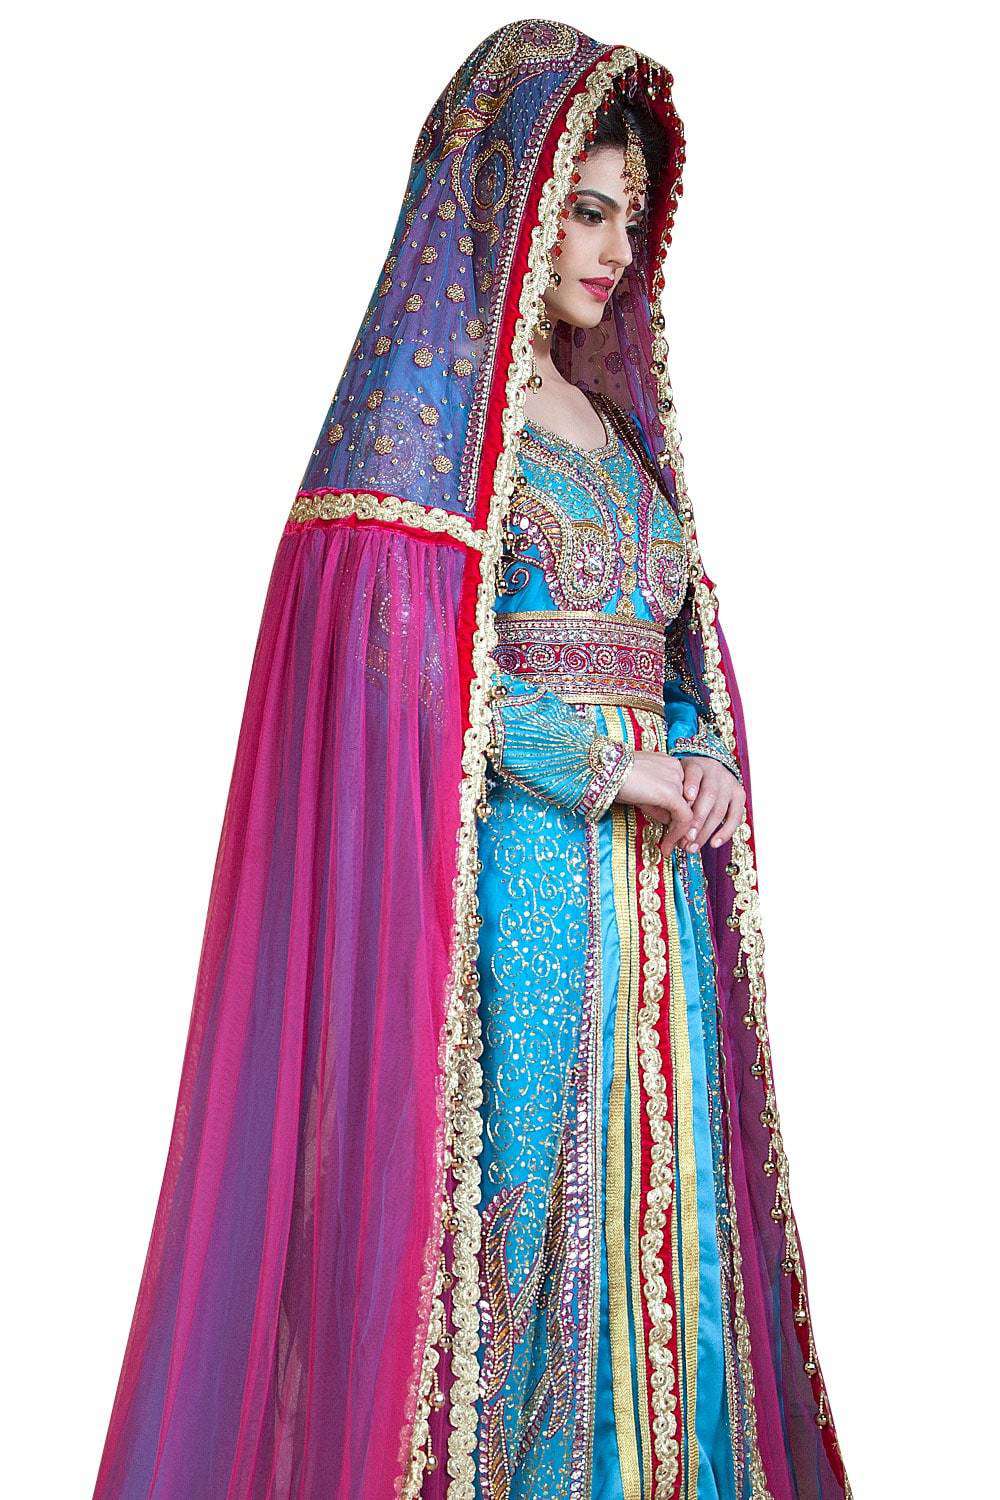 Ferozi and Dark Pink Color Designer Arabic Muslim Long Sleeve Wedding Caftan With Veil